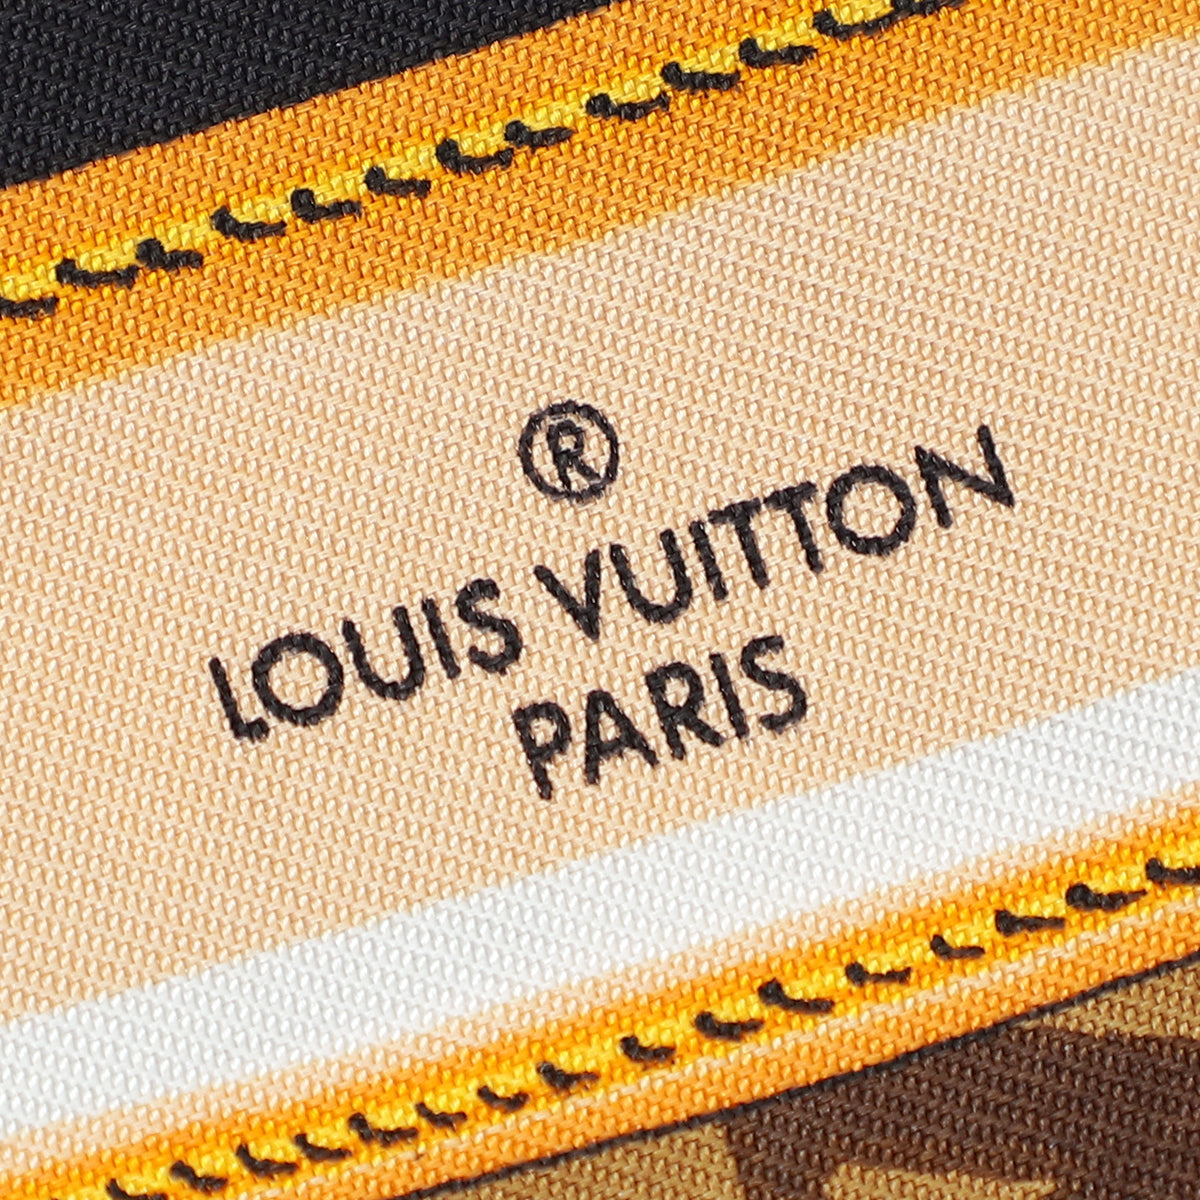 Louis+Vuitton+Monogram+Bandeau+Silk+Scarf+Brown for sale online